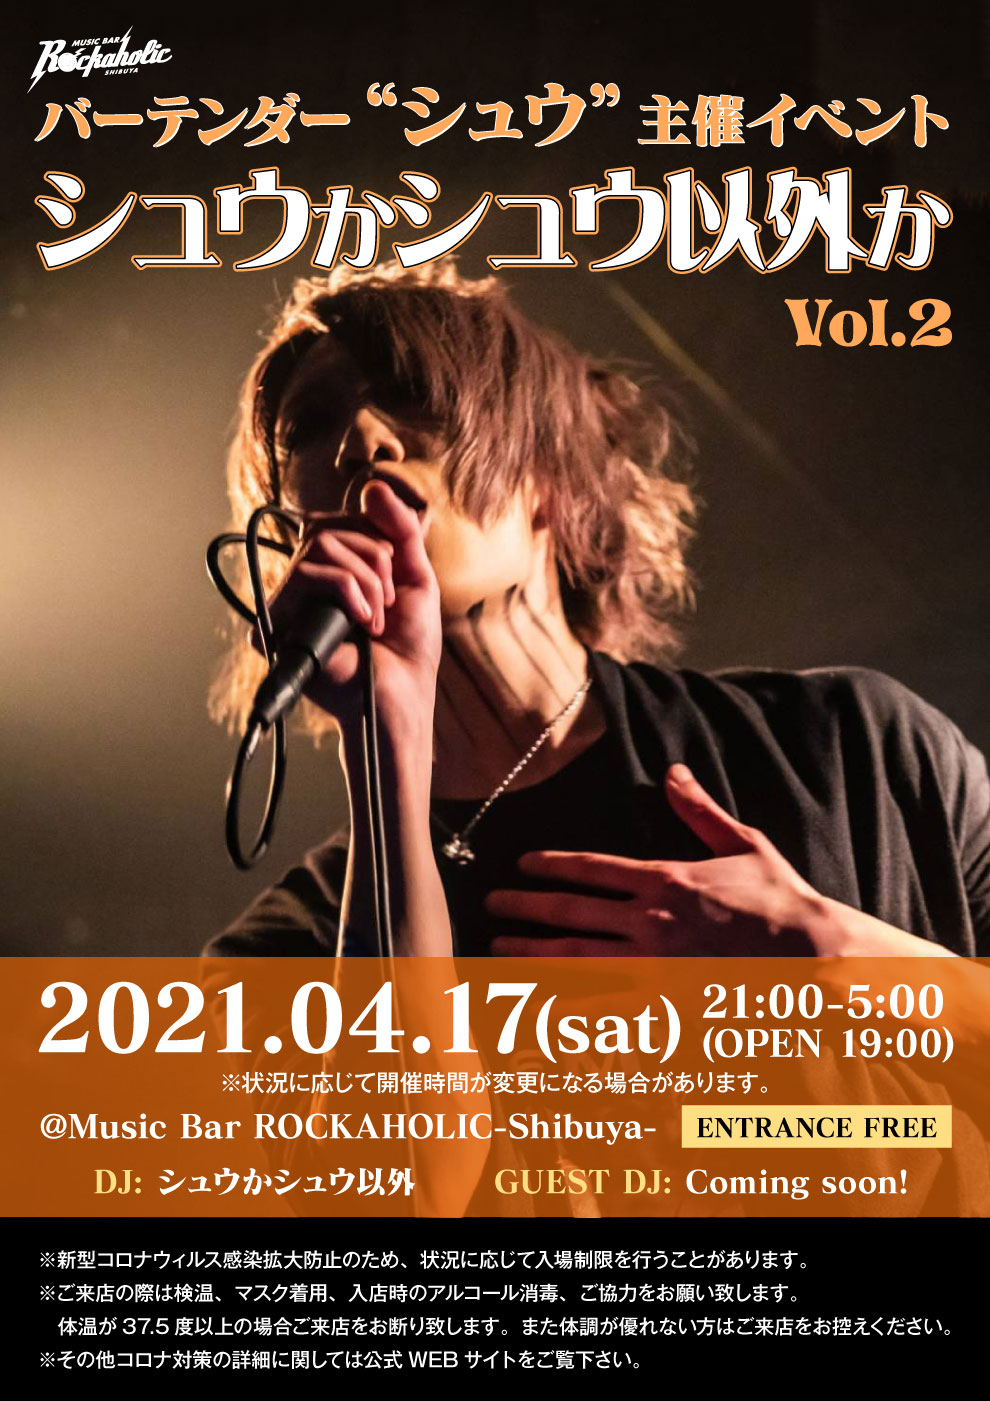 https://bar-rockaholic.jp/shibuya/blog/8EB6D6AD-6061-436D-BBF4-3DC59F415D9C.jpeg